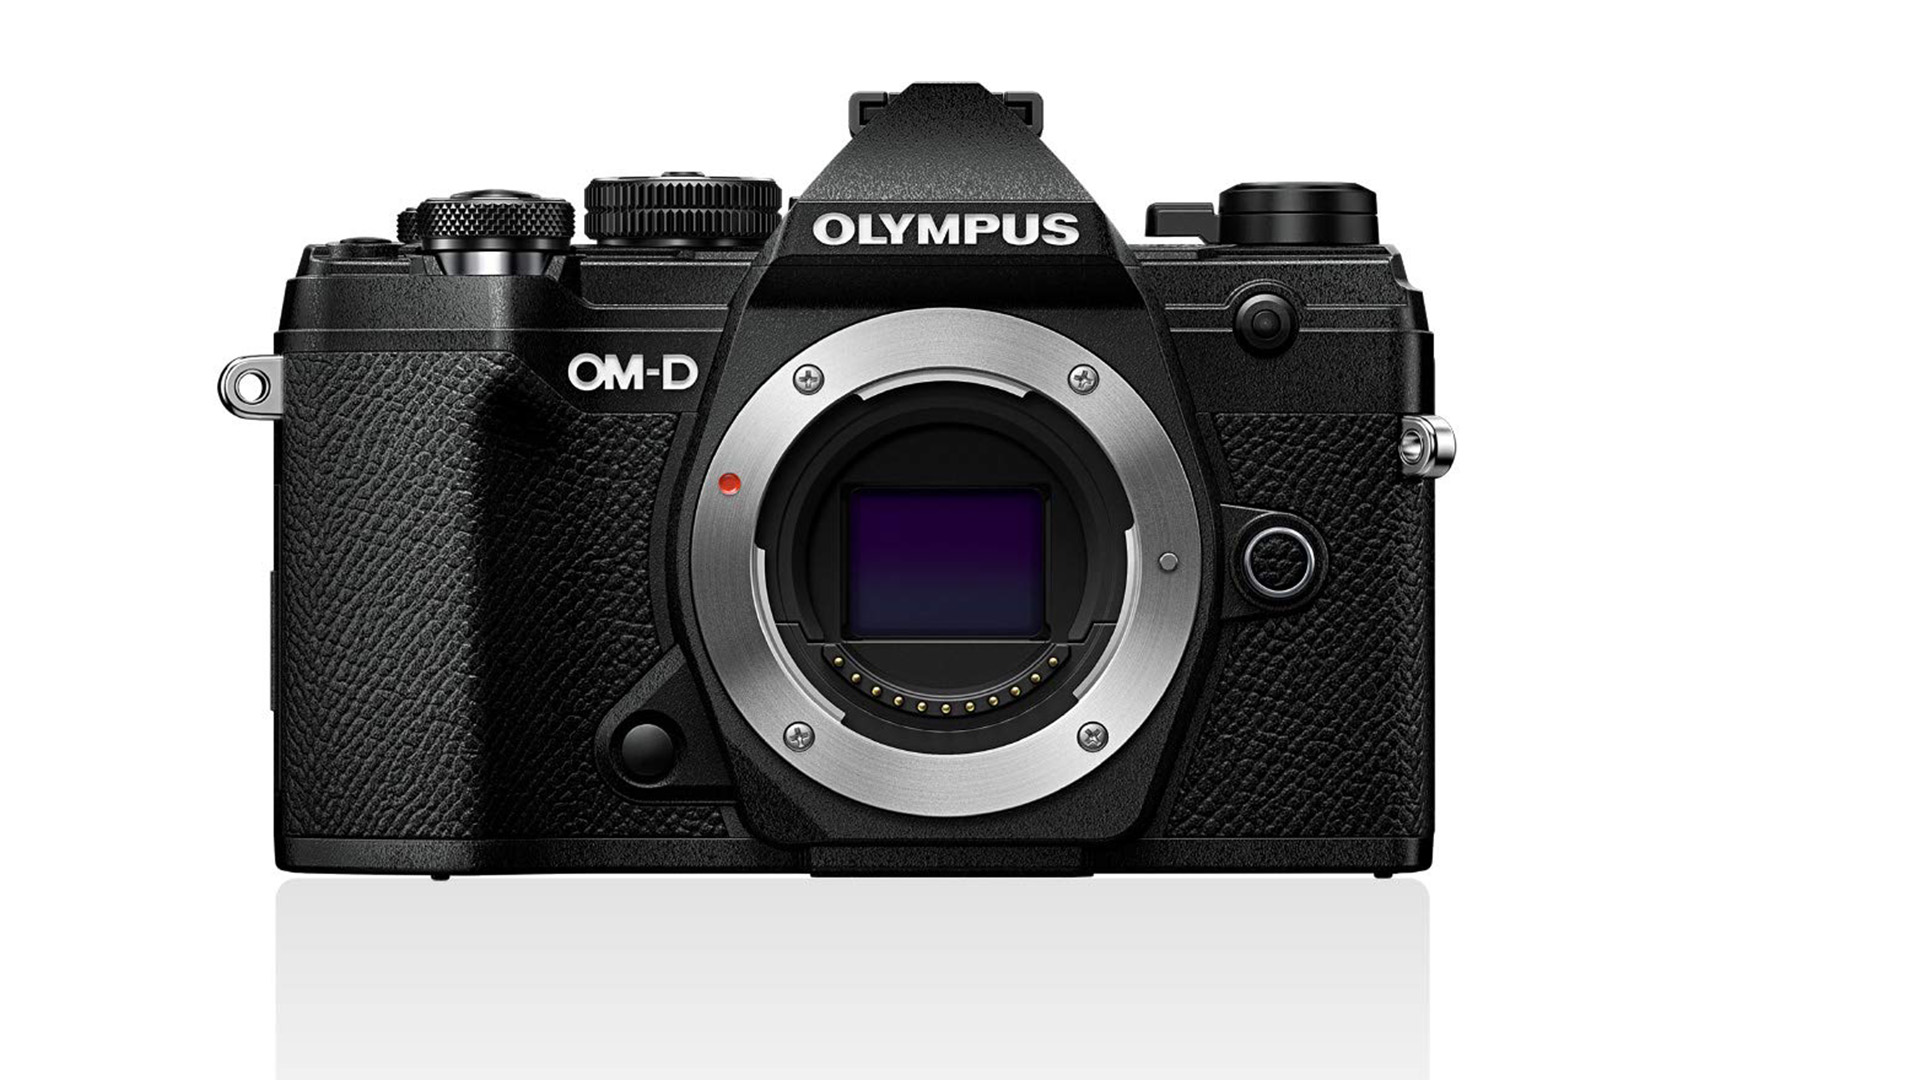 The Olympus OM-D E-M5 Mark III